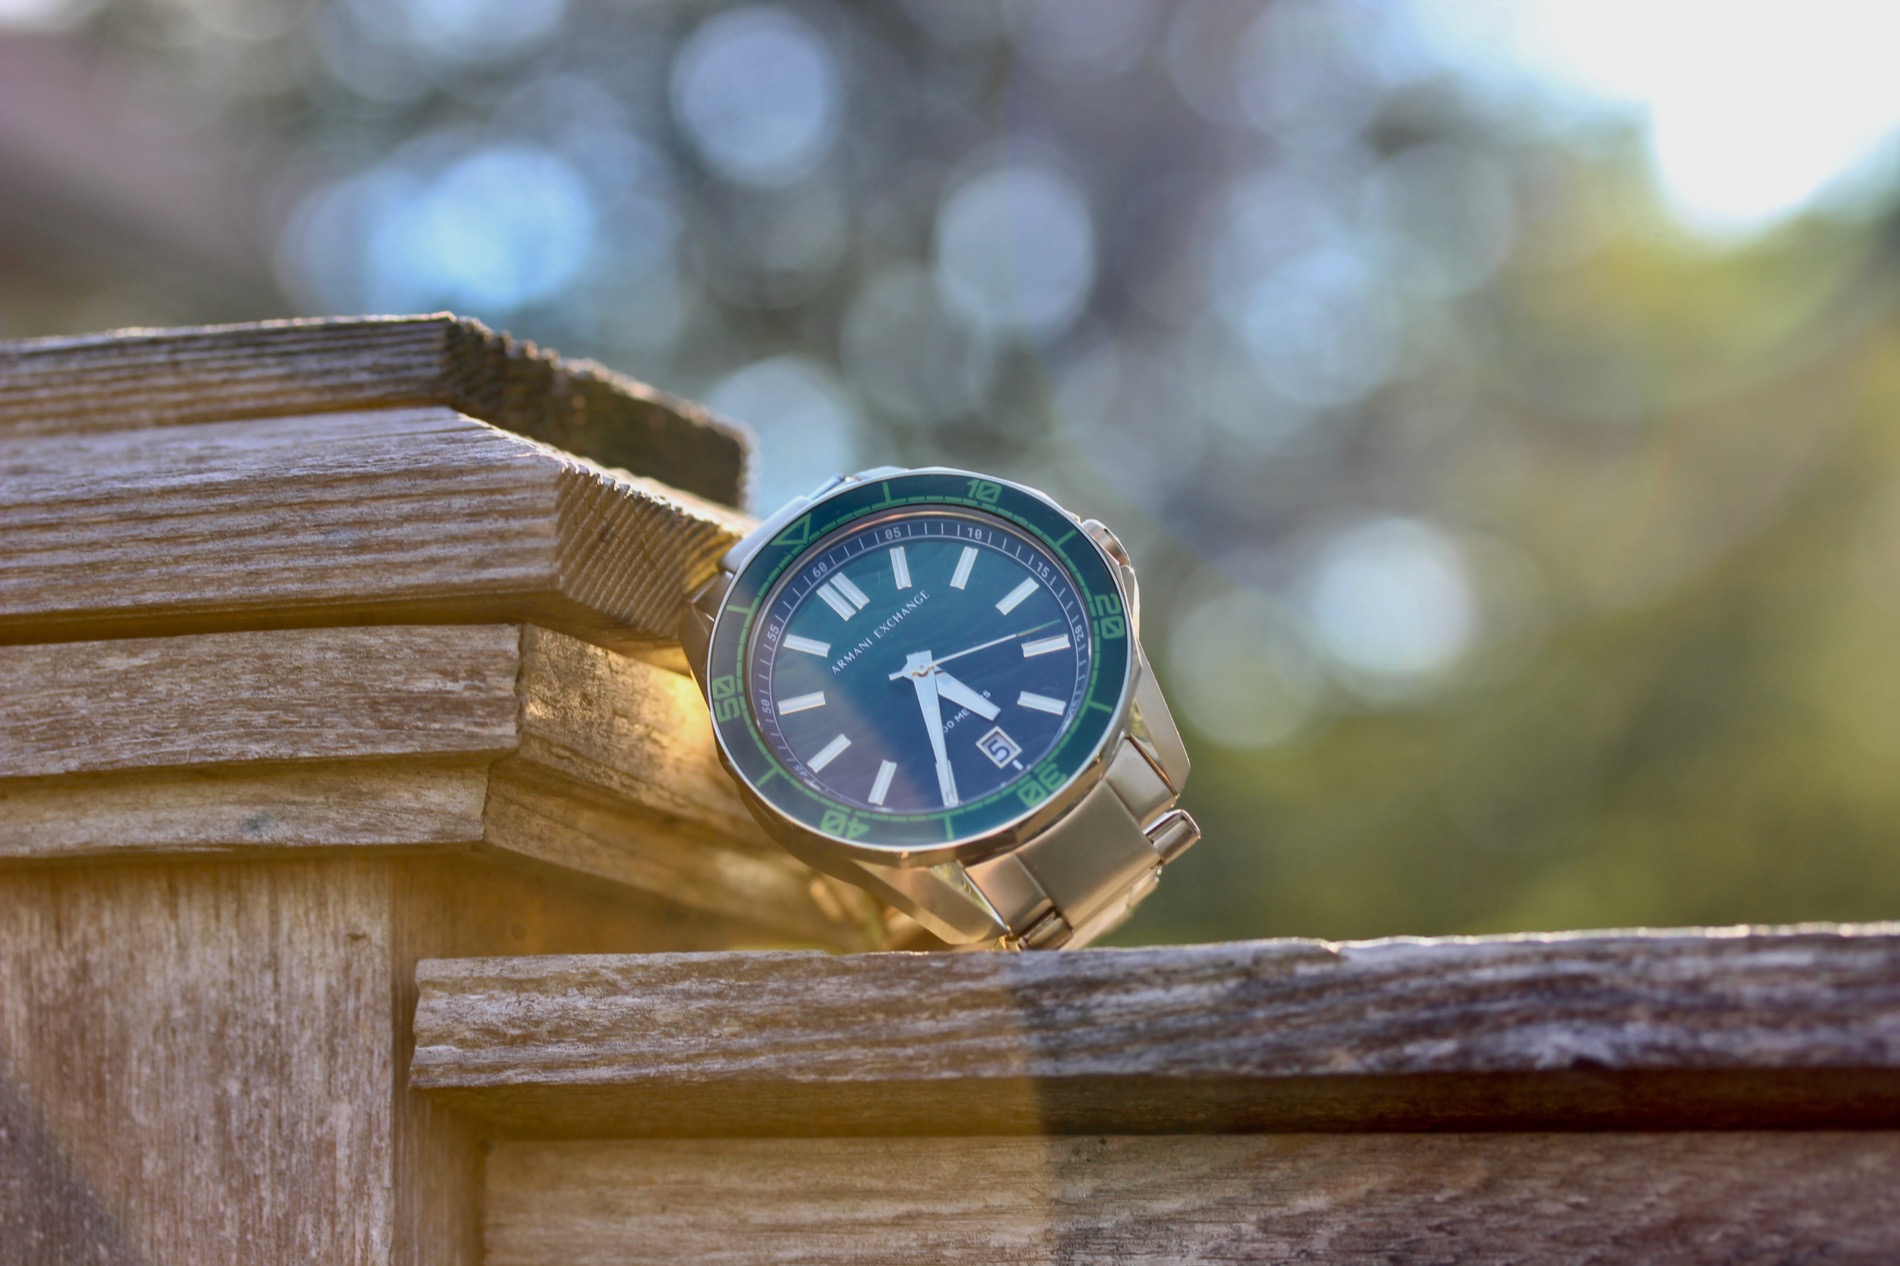 Armani Exchange AX1951 A Wrist - Wristwatch Watch Review - Review